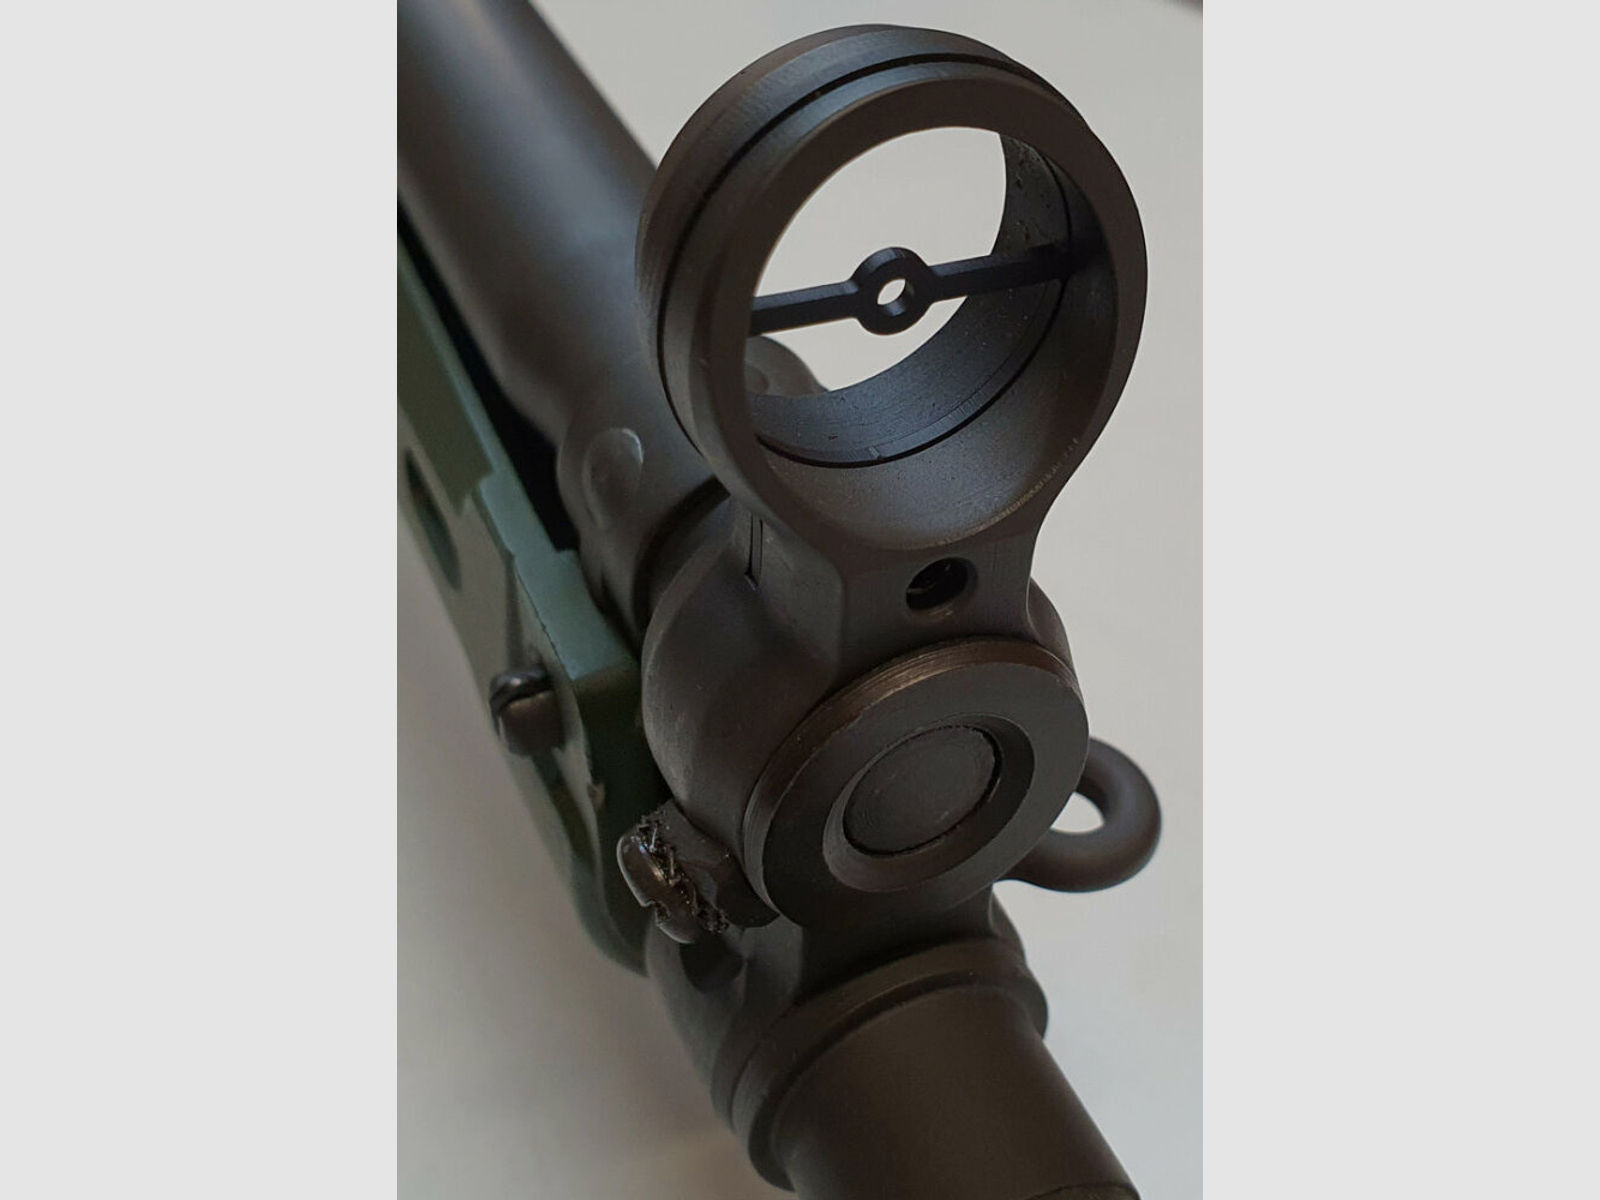 Schwaben Arms GmbH	 SAR M41, HK G3 Match Ringkorn Ø 2,2mm Visier für Kornträger, auch HK SL6, SL7, G3, MP5, HK33, etc.